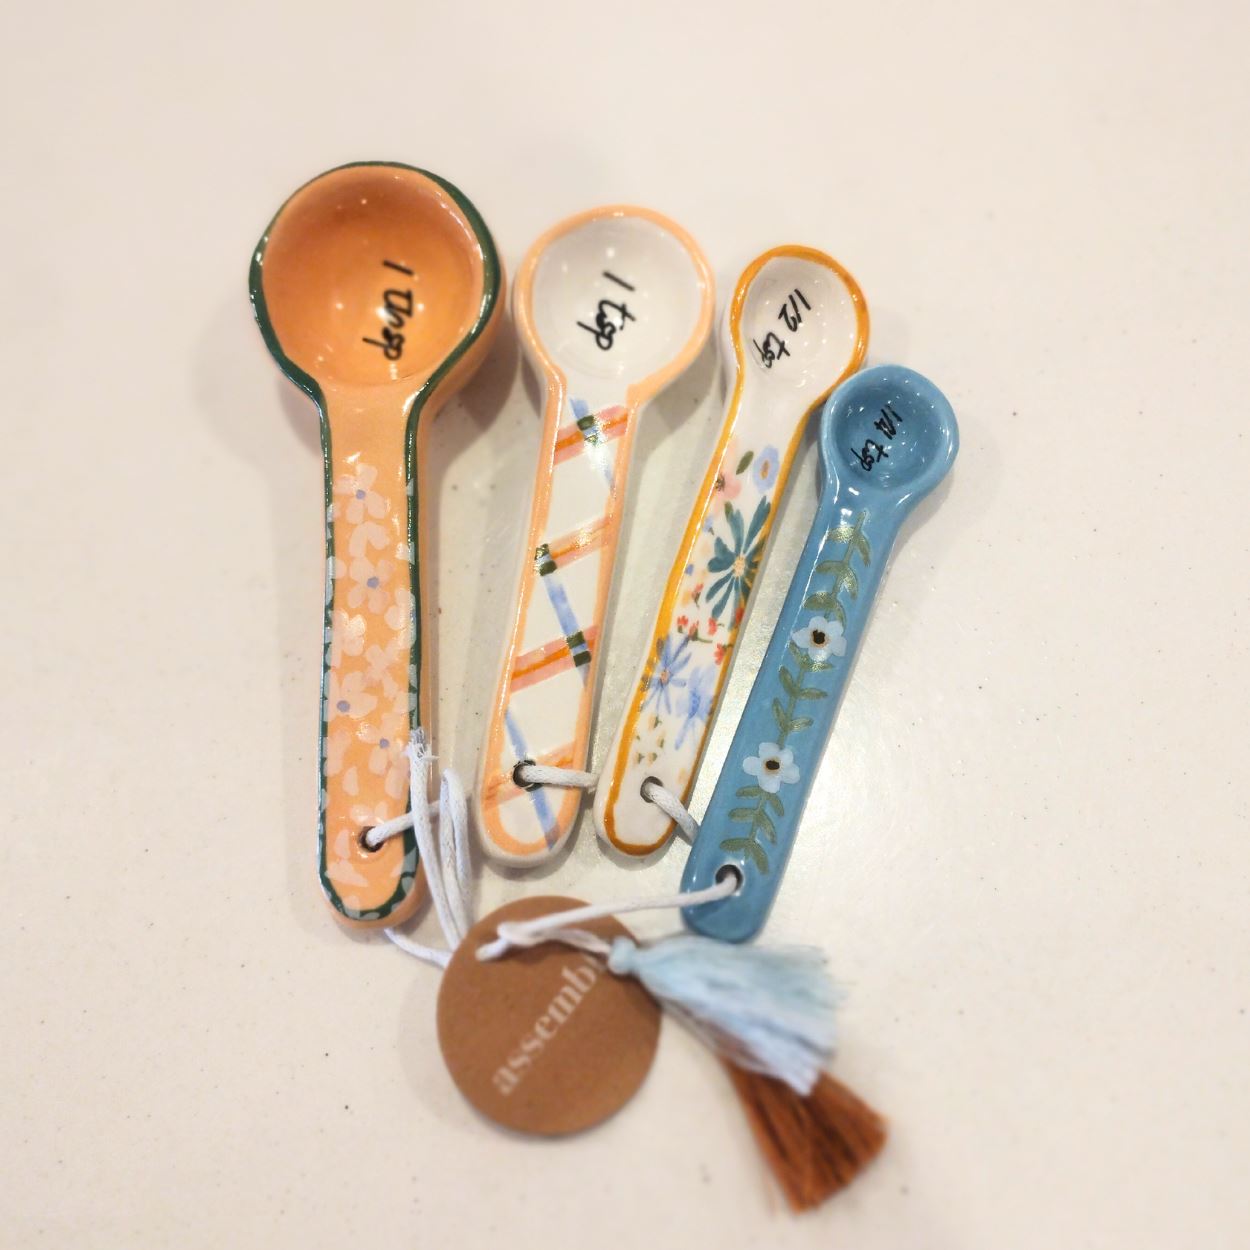 Frankie Set of 4 Ceramic Measuring Spoons Measuring Spoons Coast to Coast 